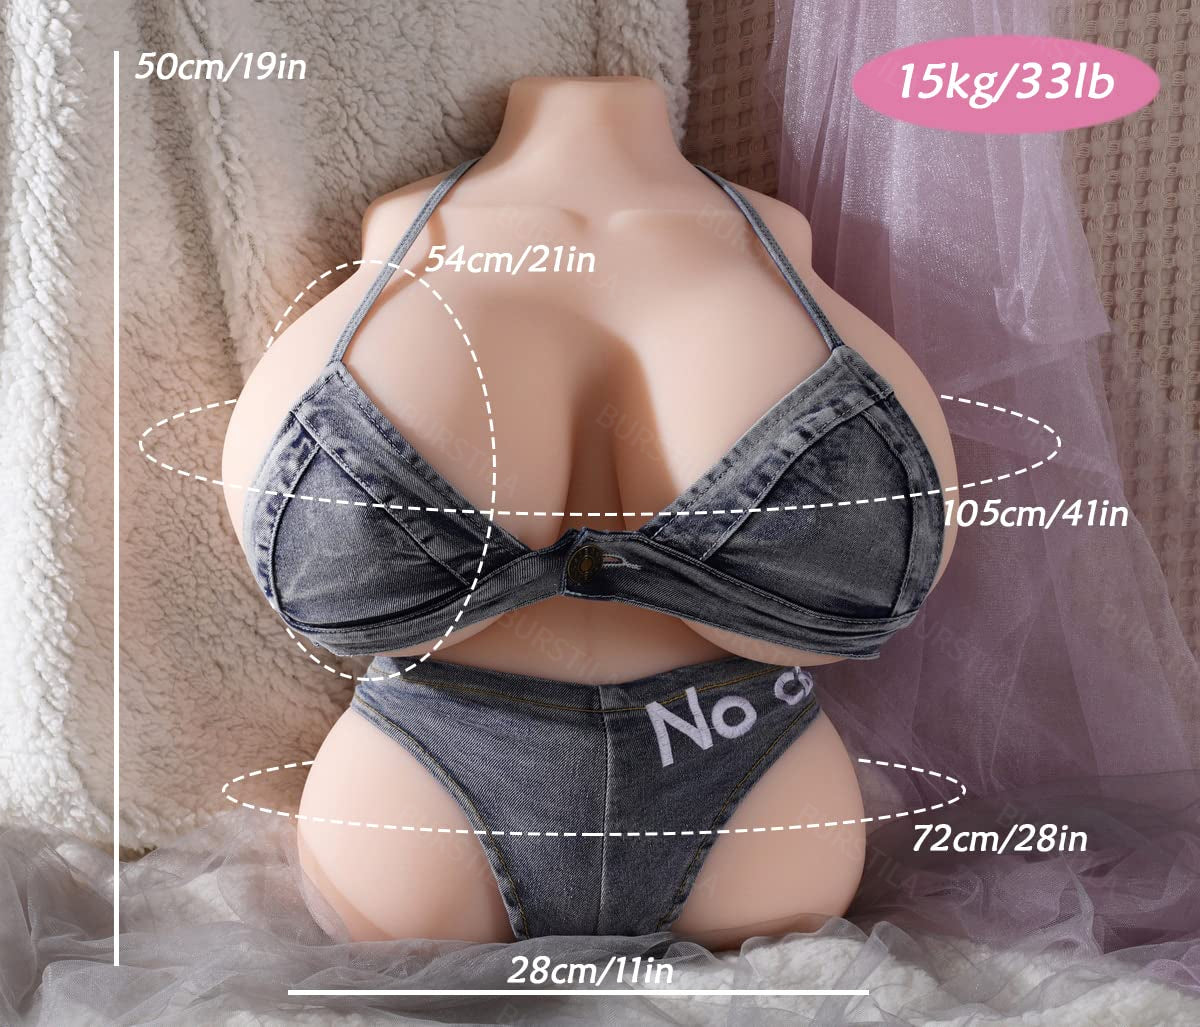 EU Stock - 50cm/19.7in Realistic Torso Sex Doll 15kg/33lbs Half Body Big Breasts Love Doll Torso